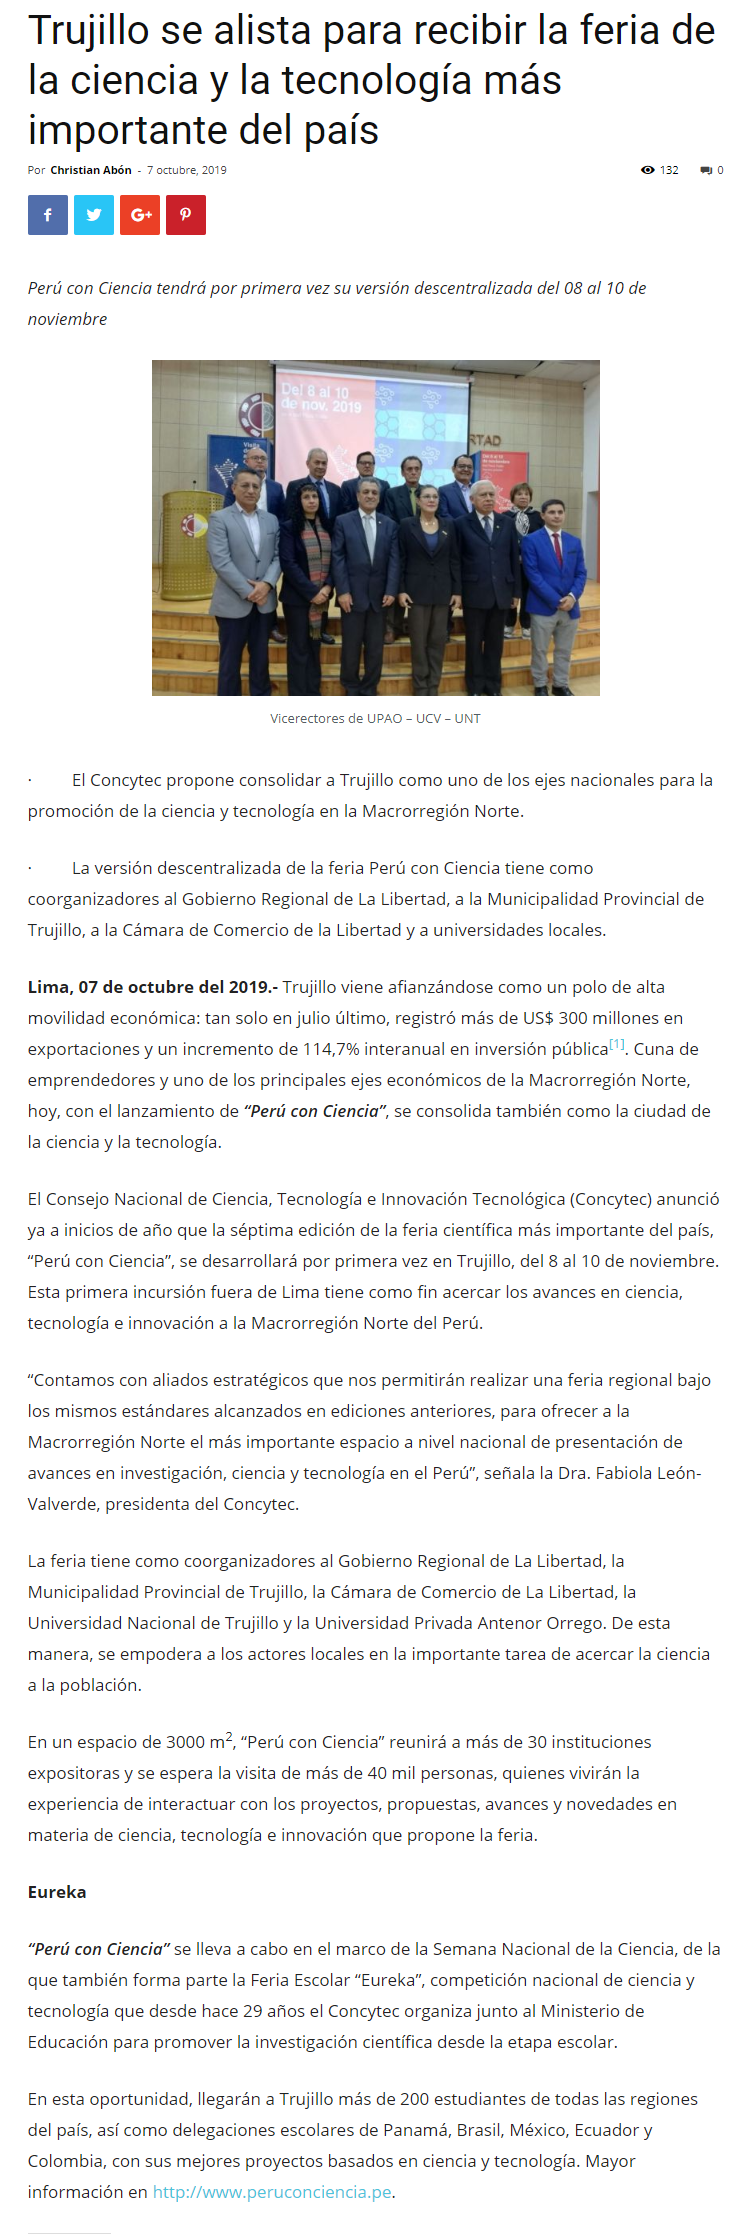 09.10.19.15 Technopatas Trujillo acogerá Perú con Ciencia